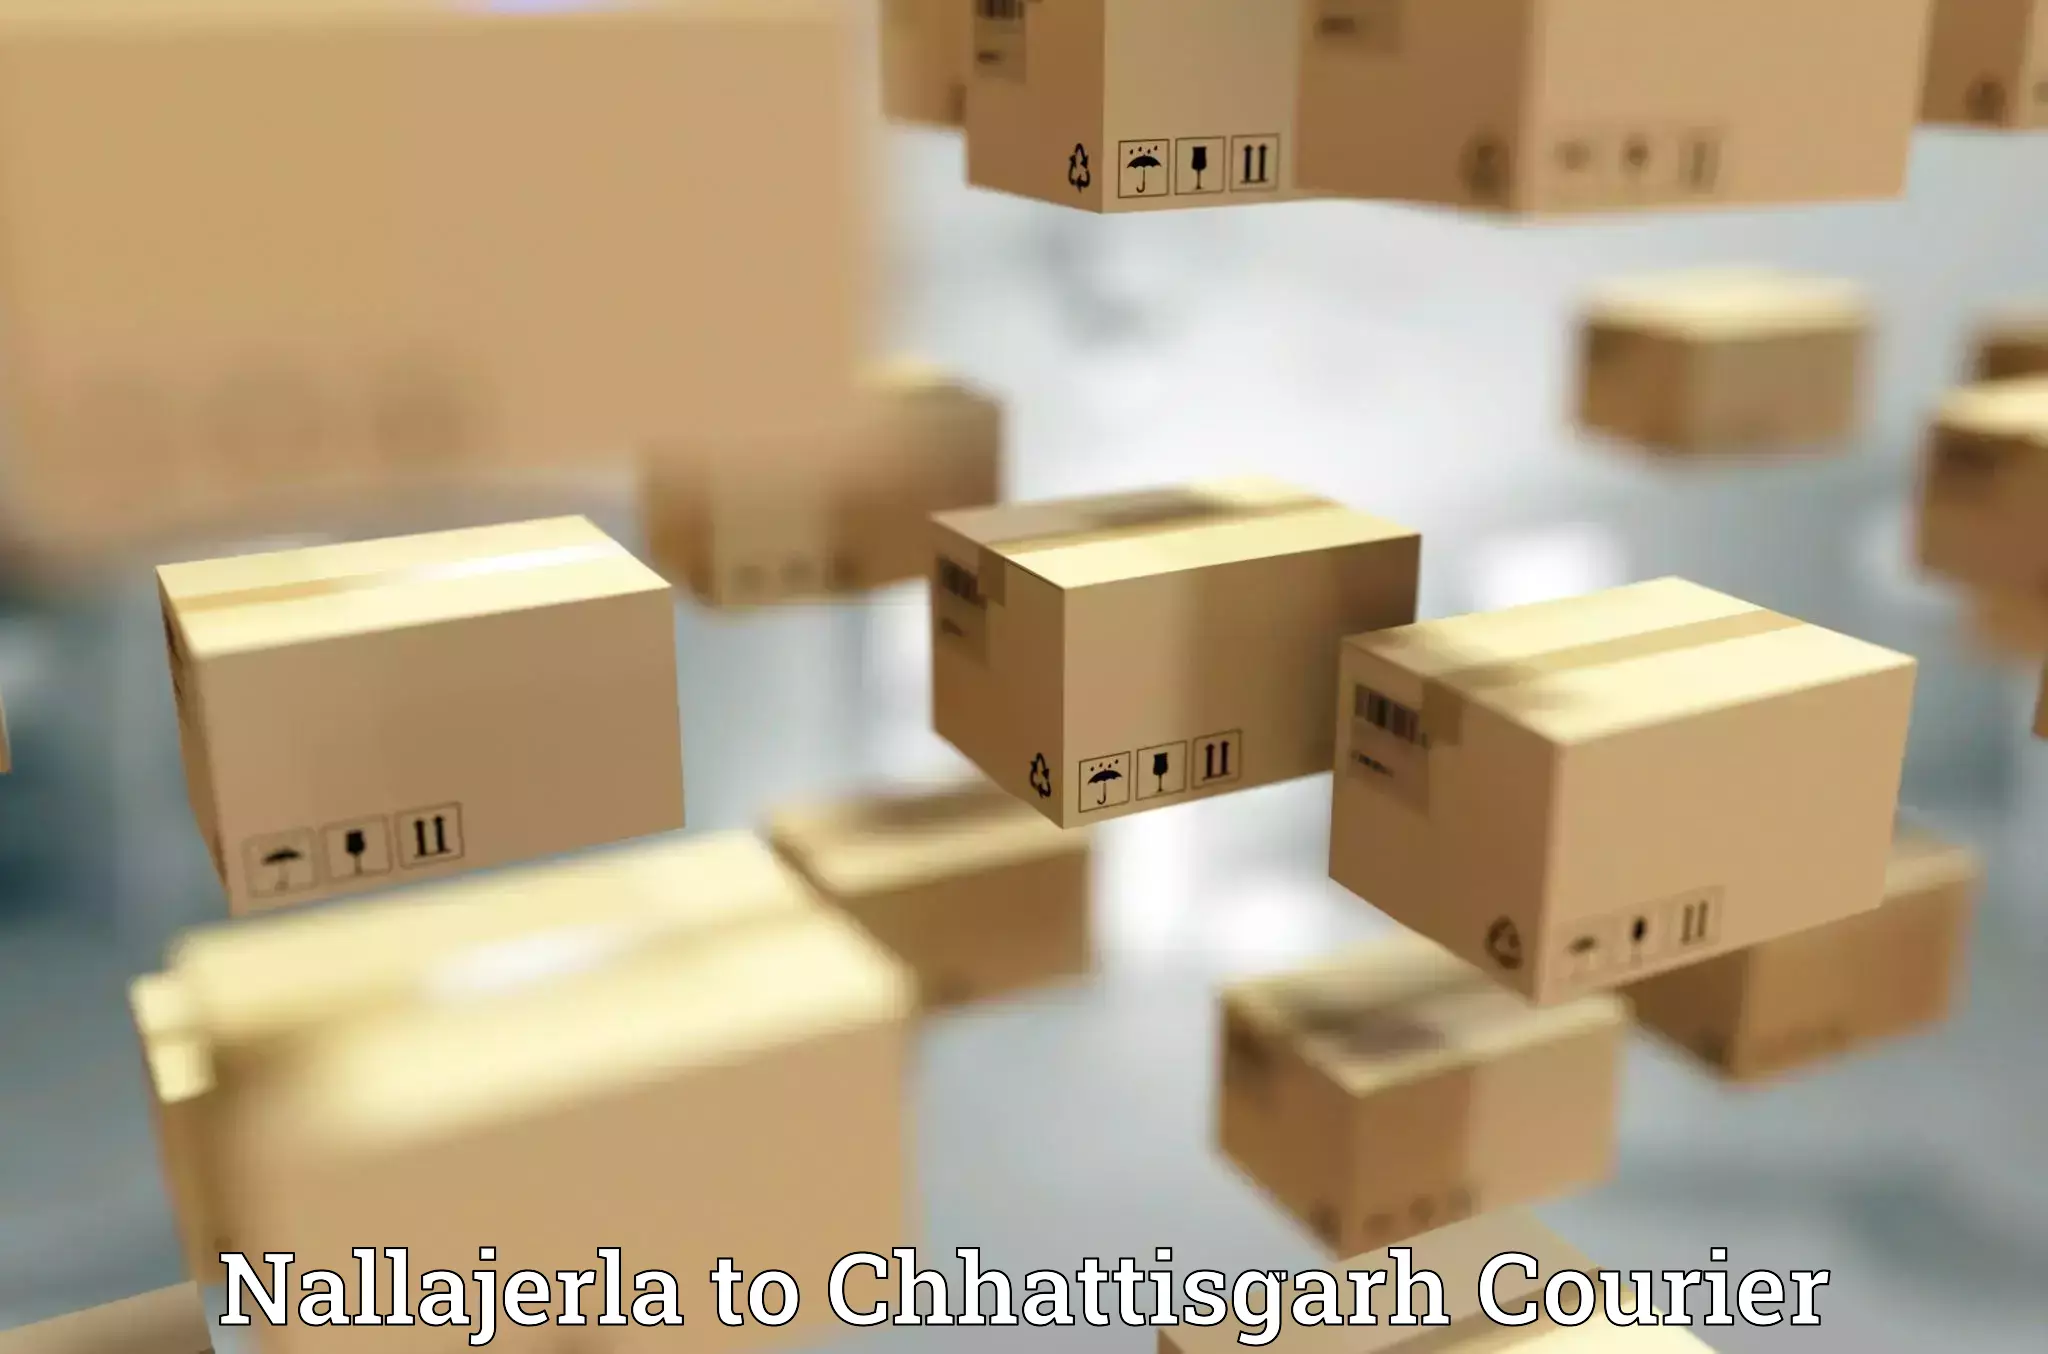 State-of-the-art courier technology Nallajerla to Chhattisgarh